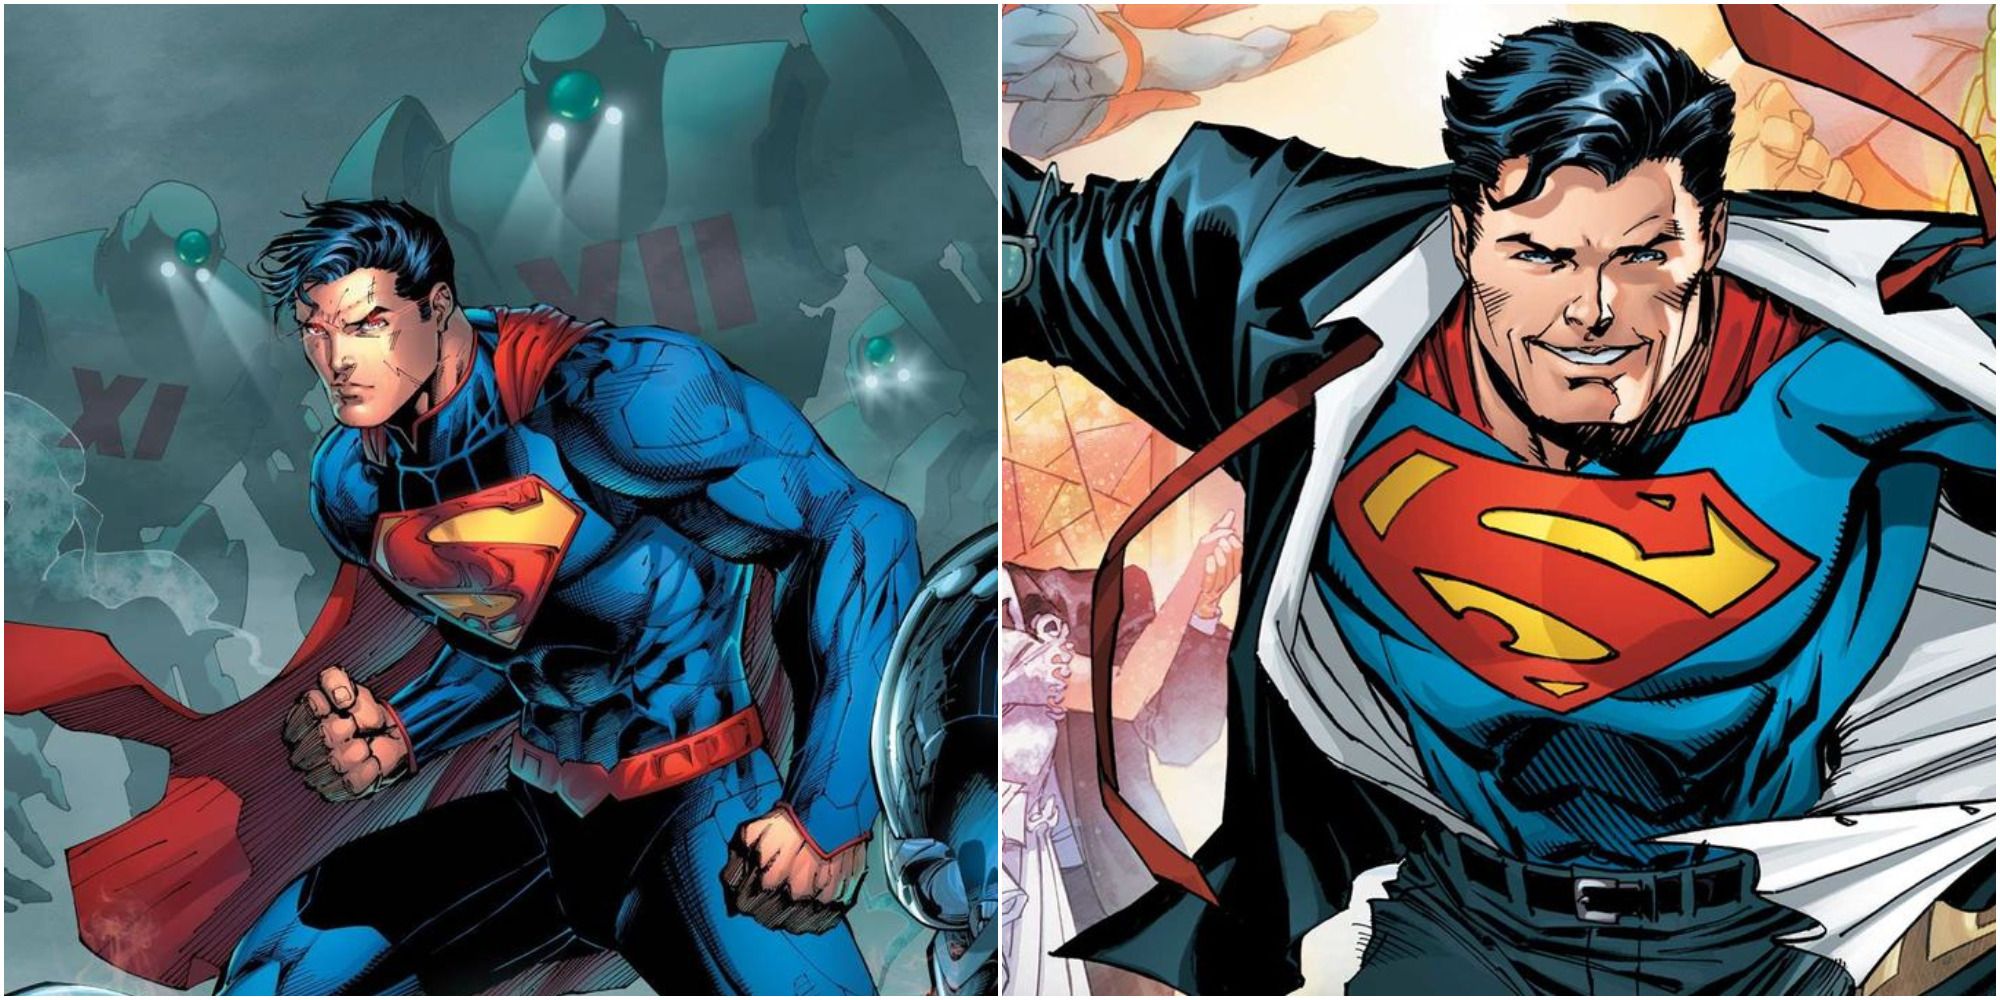 New 52 Superman and Post-Crisis Superman